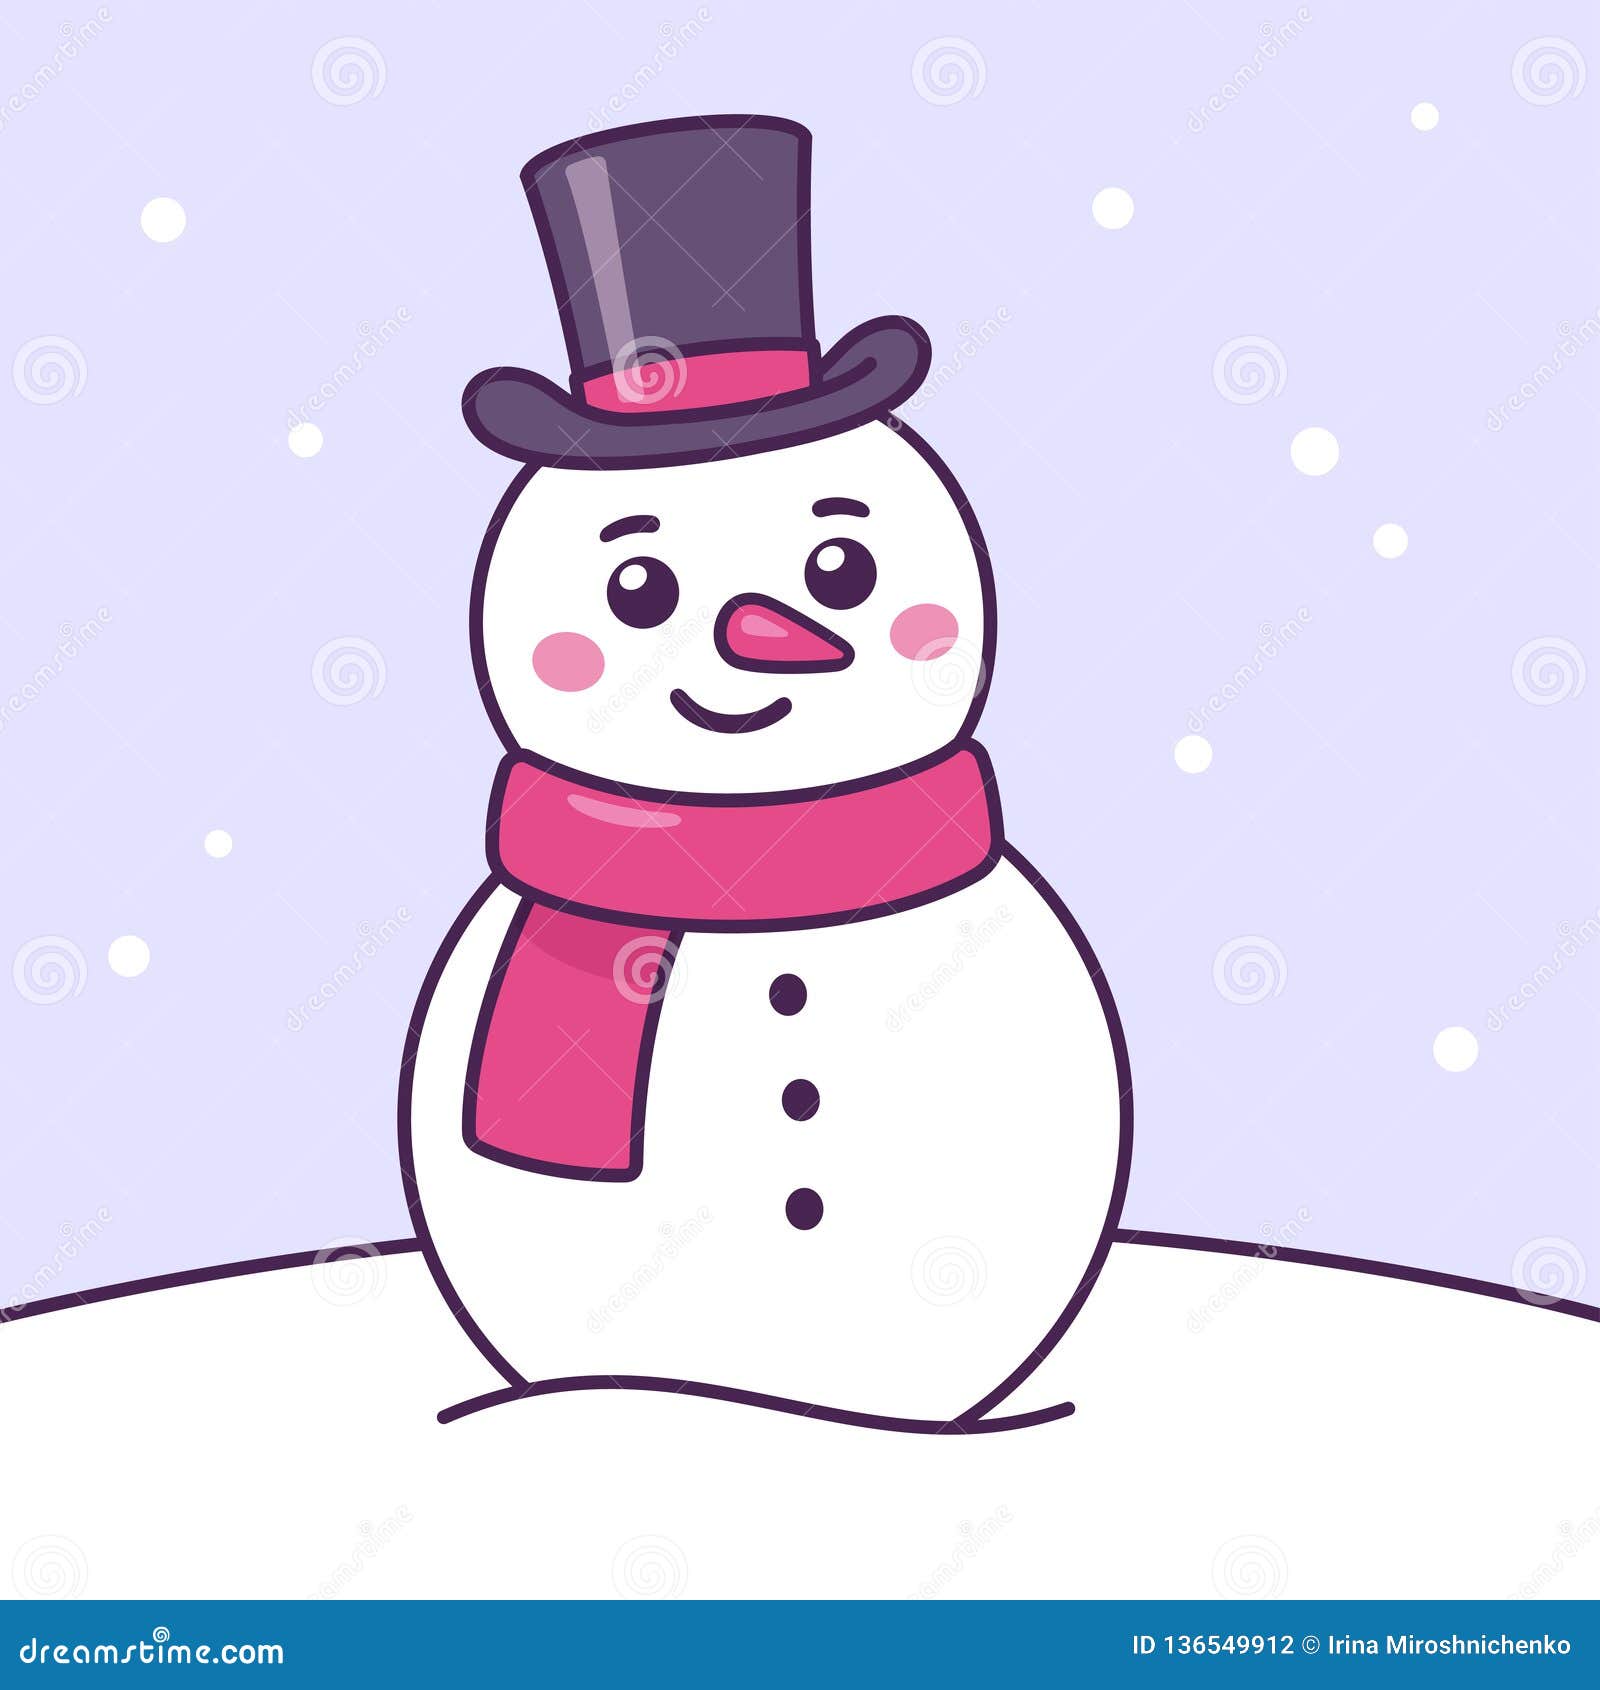 Cartoon snowman drawing stock vector. Illustration of simple - 136549912